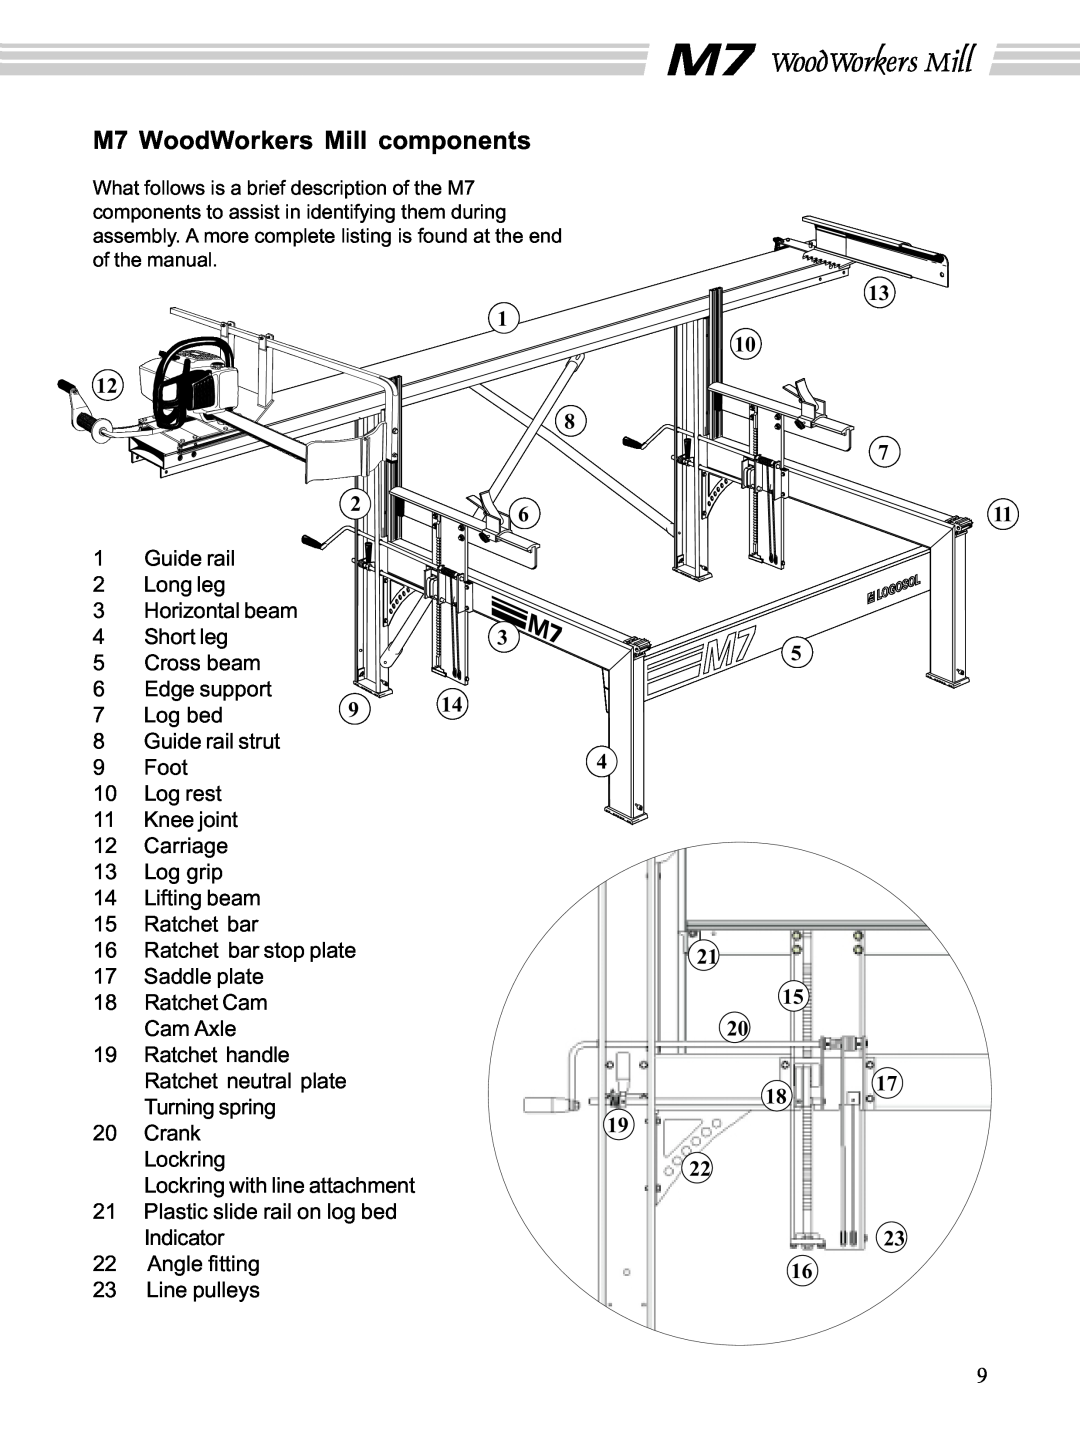 Husqvarna manual M7 WoodWorkers Mill components 